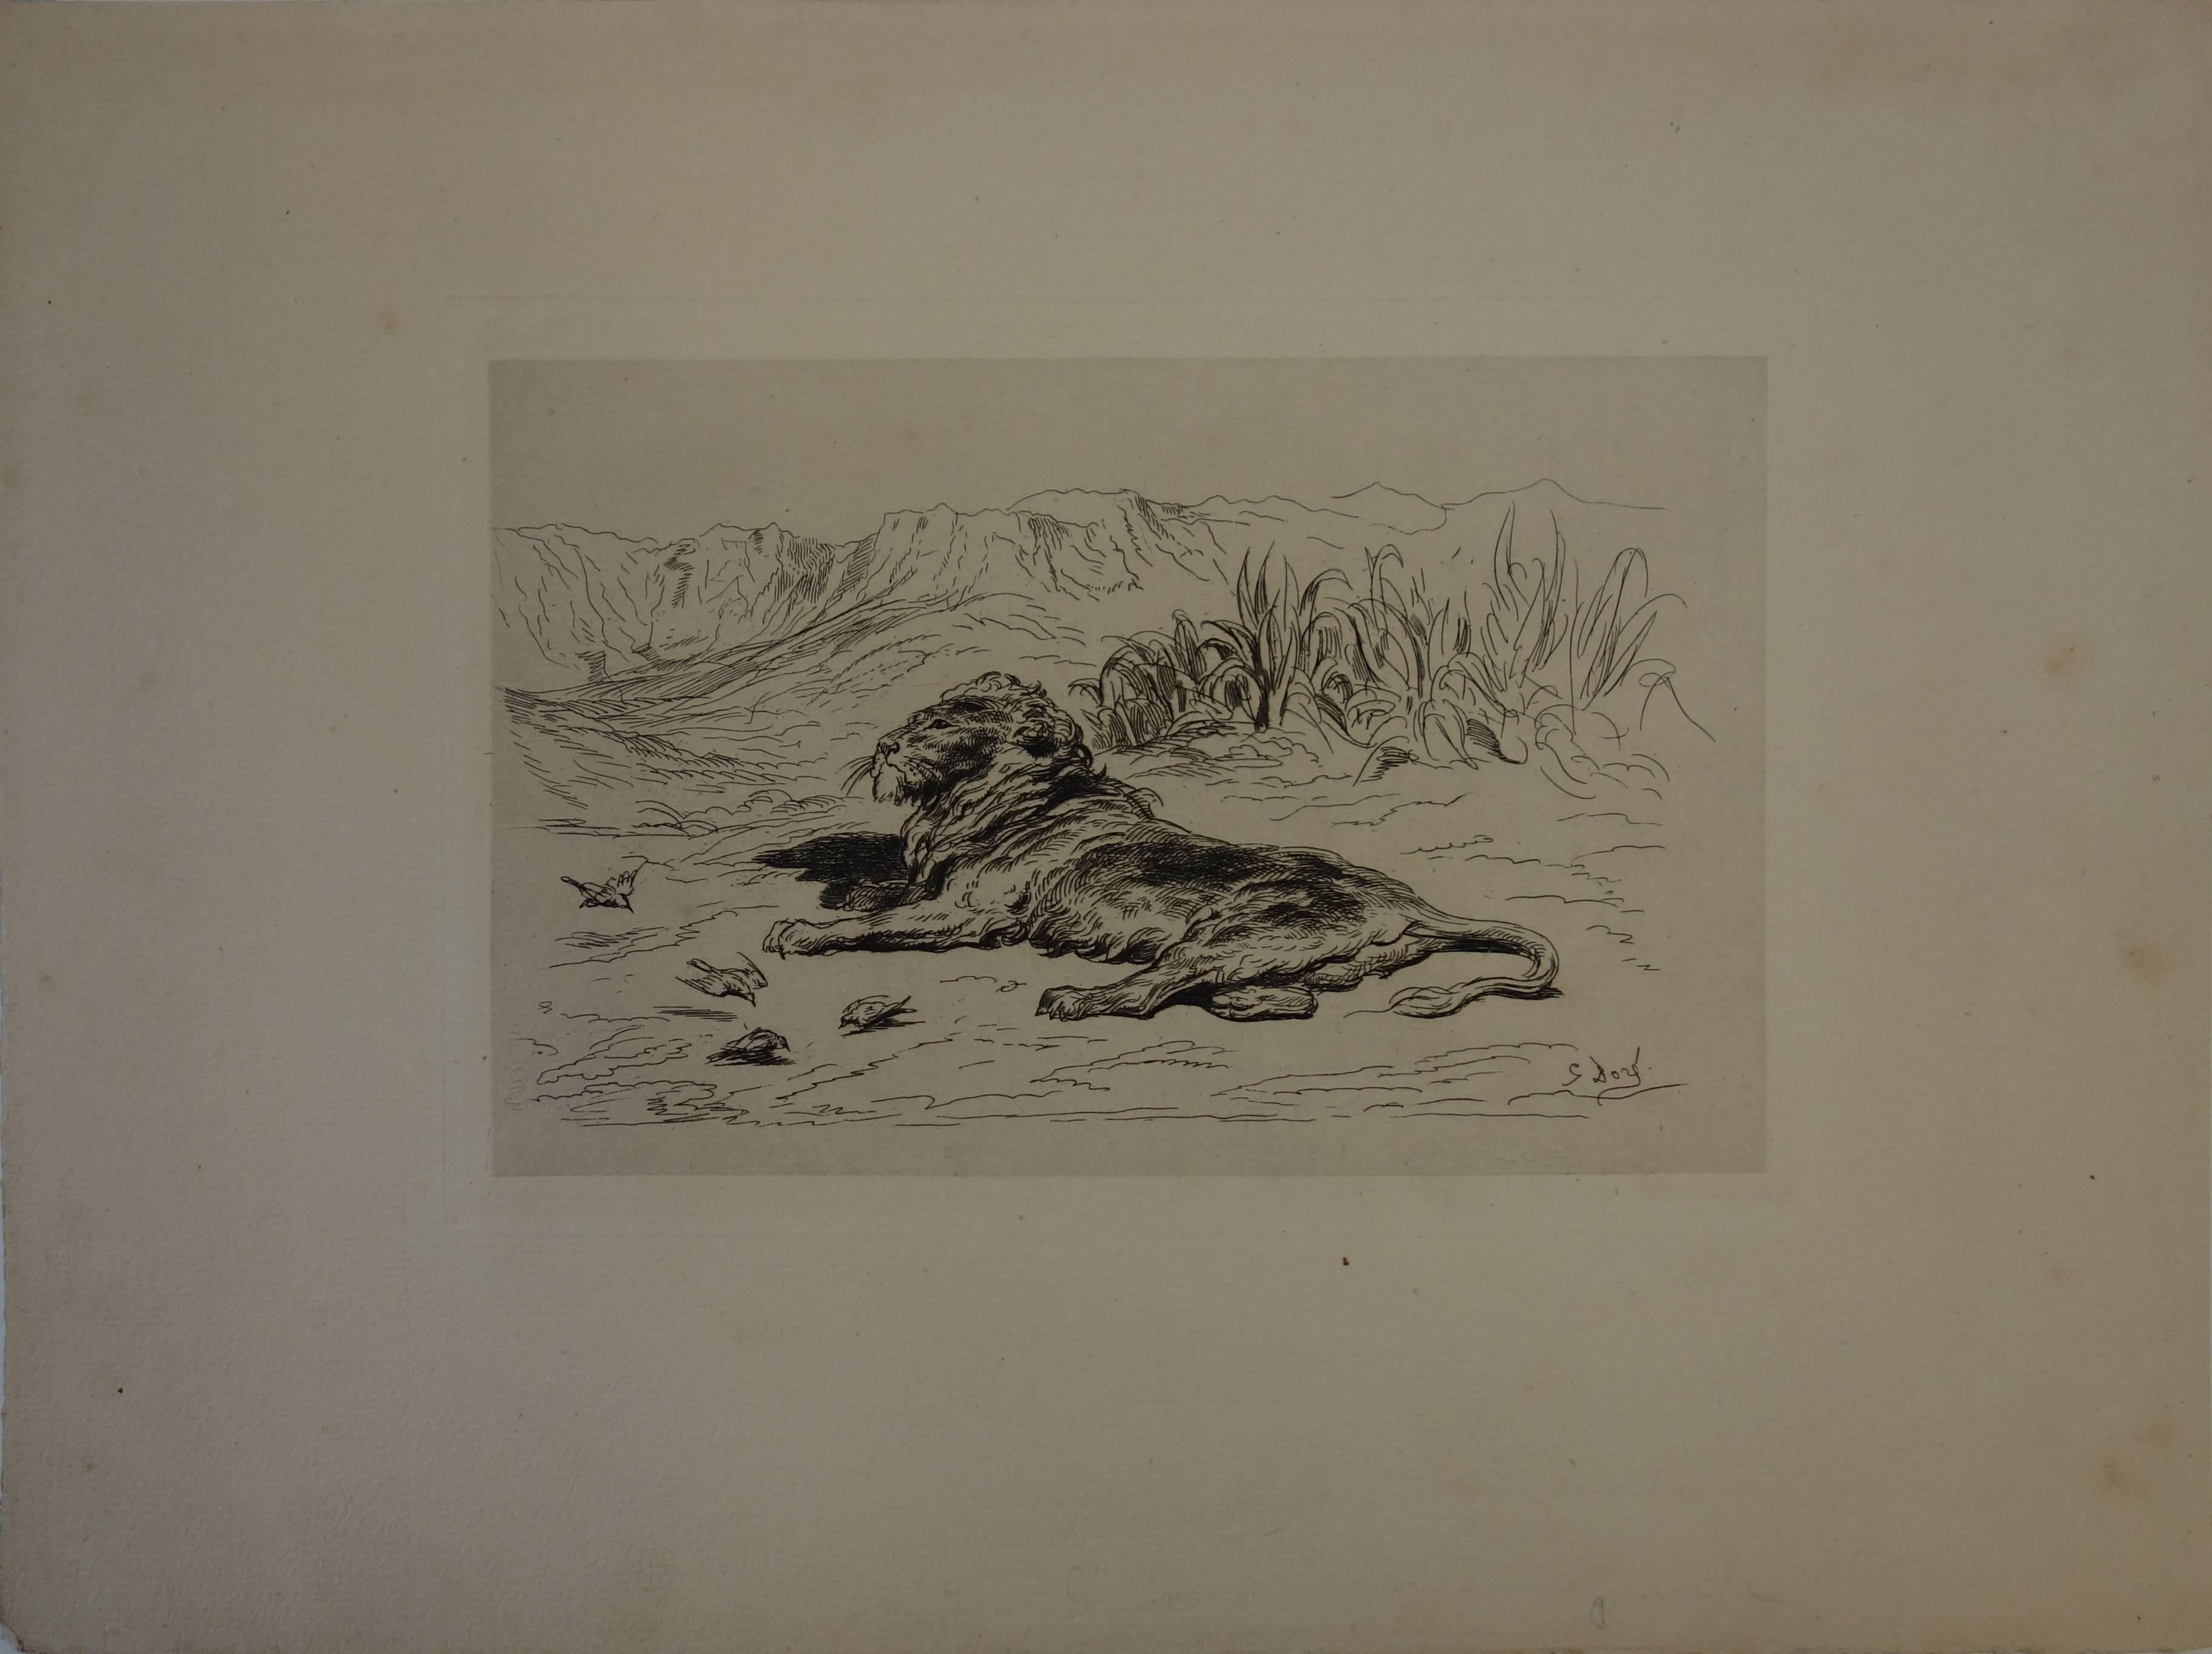 Gustave Doré Animal Print - Reclining Lion - Original etching